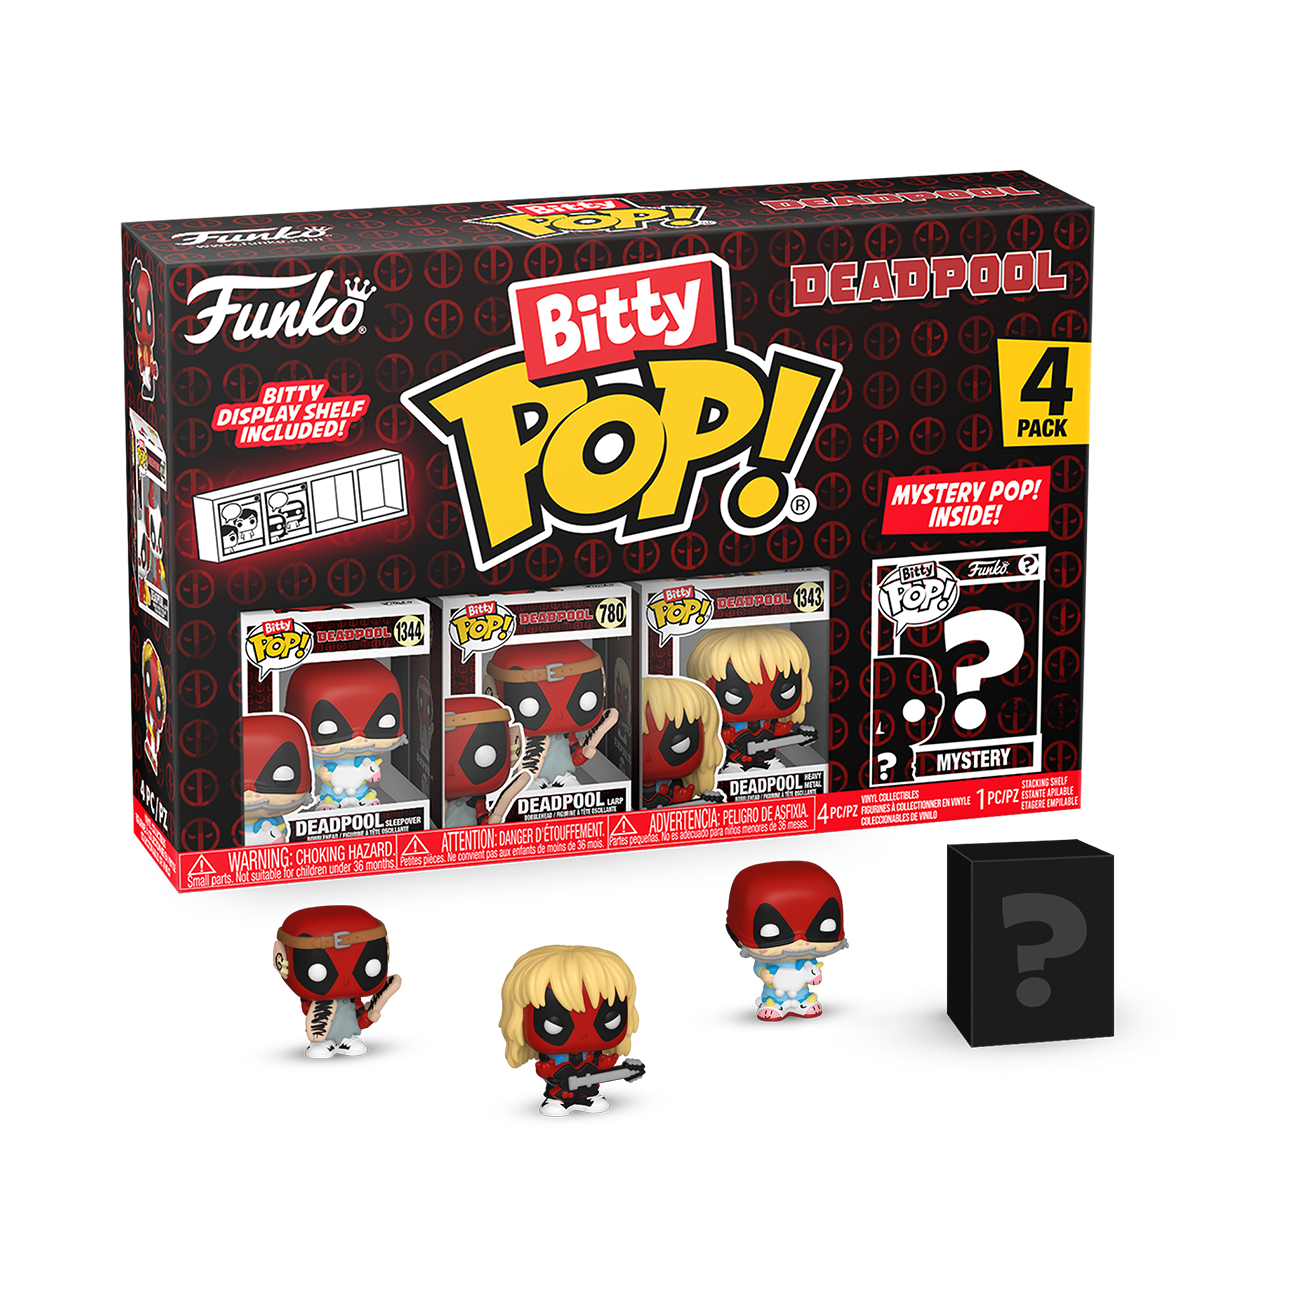 Funko Bitty Pop! Deadpool 4-Pack Series 4